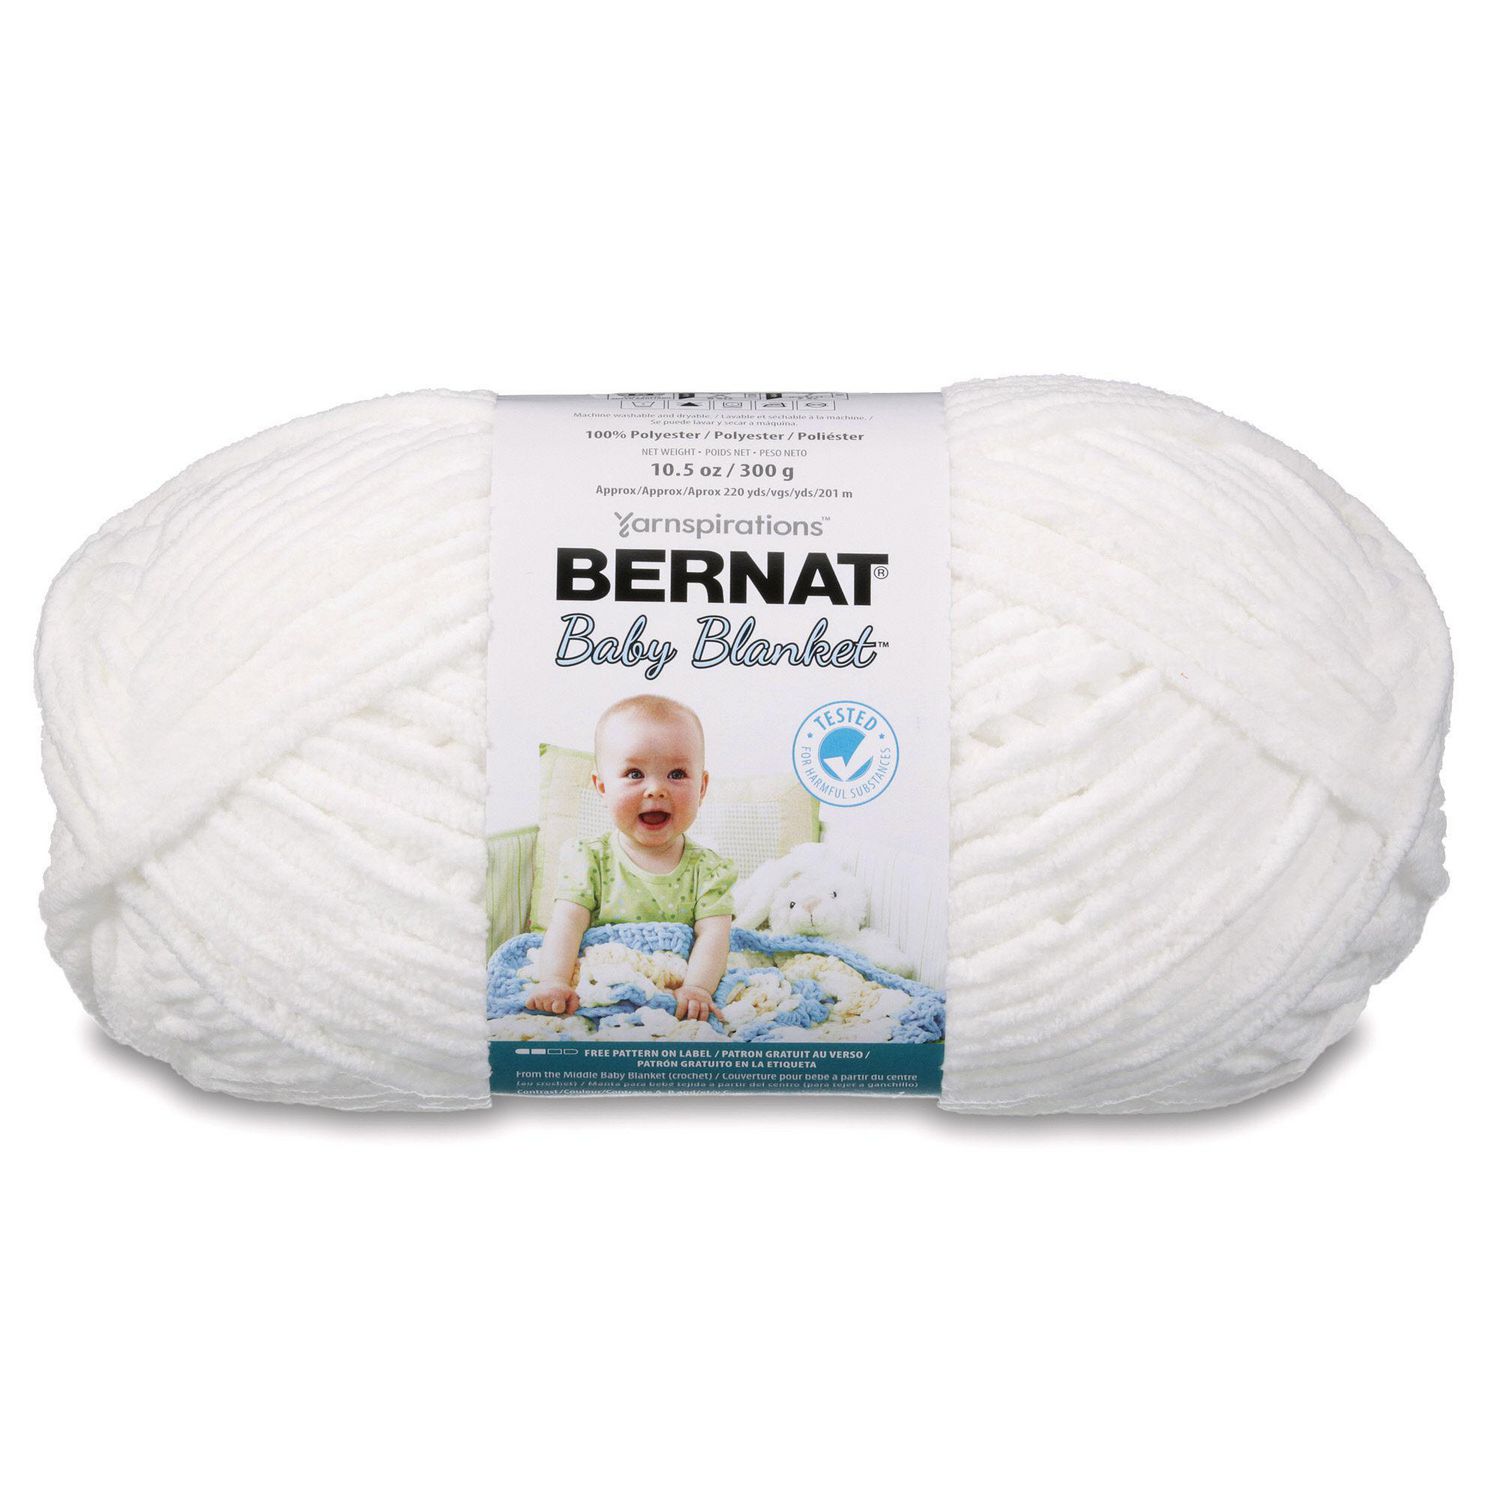 Bernat Baby Blanket Vanilla Yarn - 3 Pack of 100g/3.5oz - Polyester - 6  Super Bulky - 72 Yards - Knitting, Crocheting, Crafts & Amigurumi, Chunky